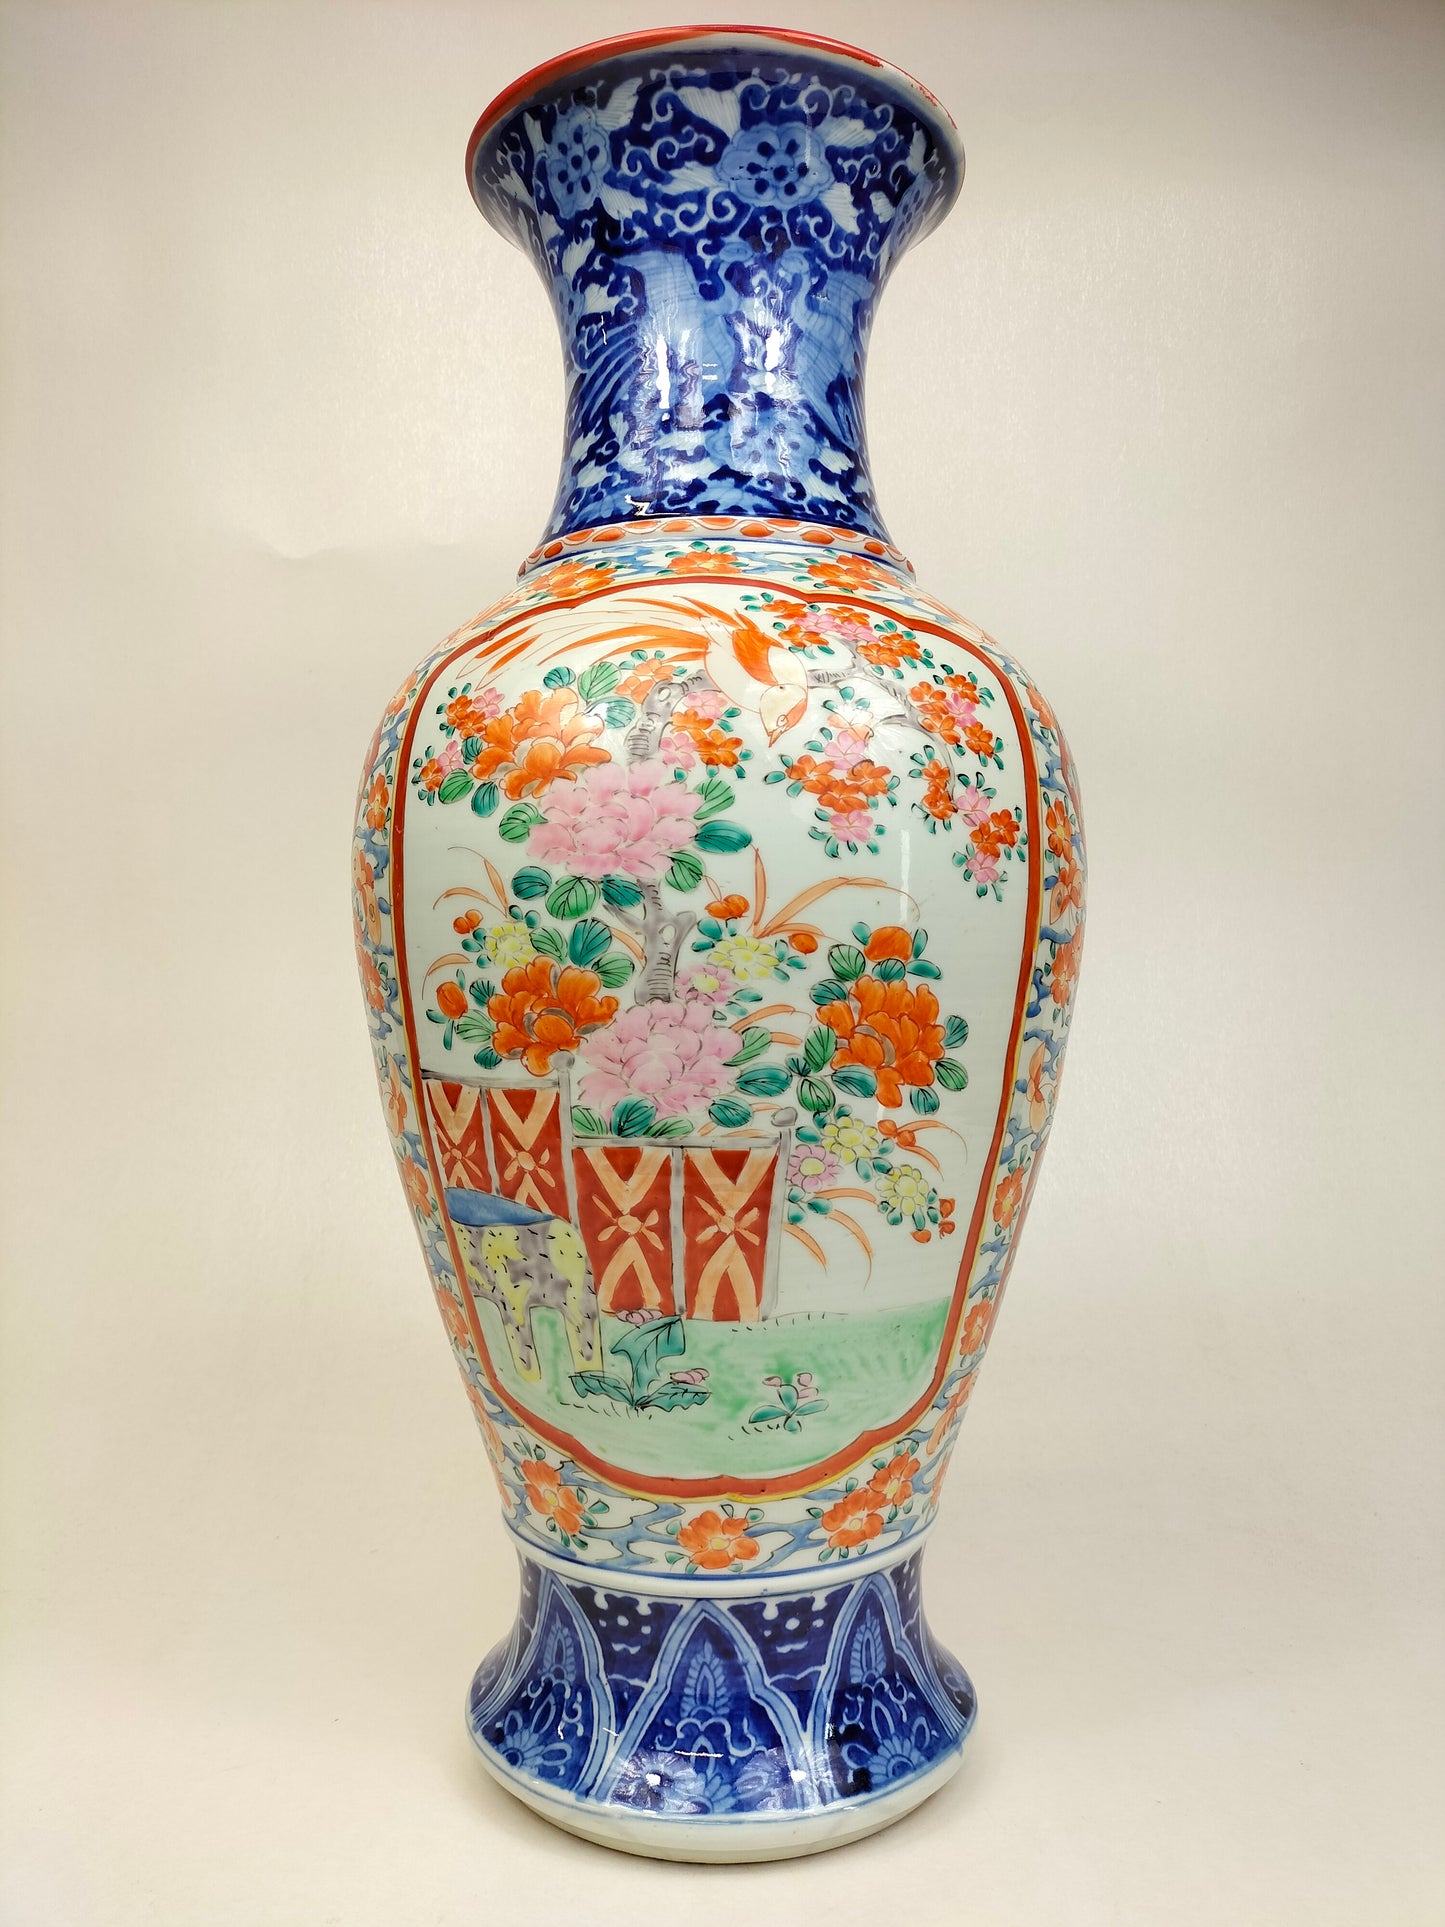 Large antique Japanese imari vase decorated with flowers // Meiji period - 19th century